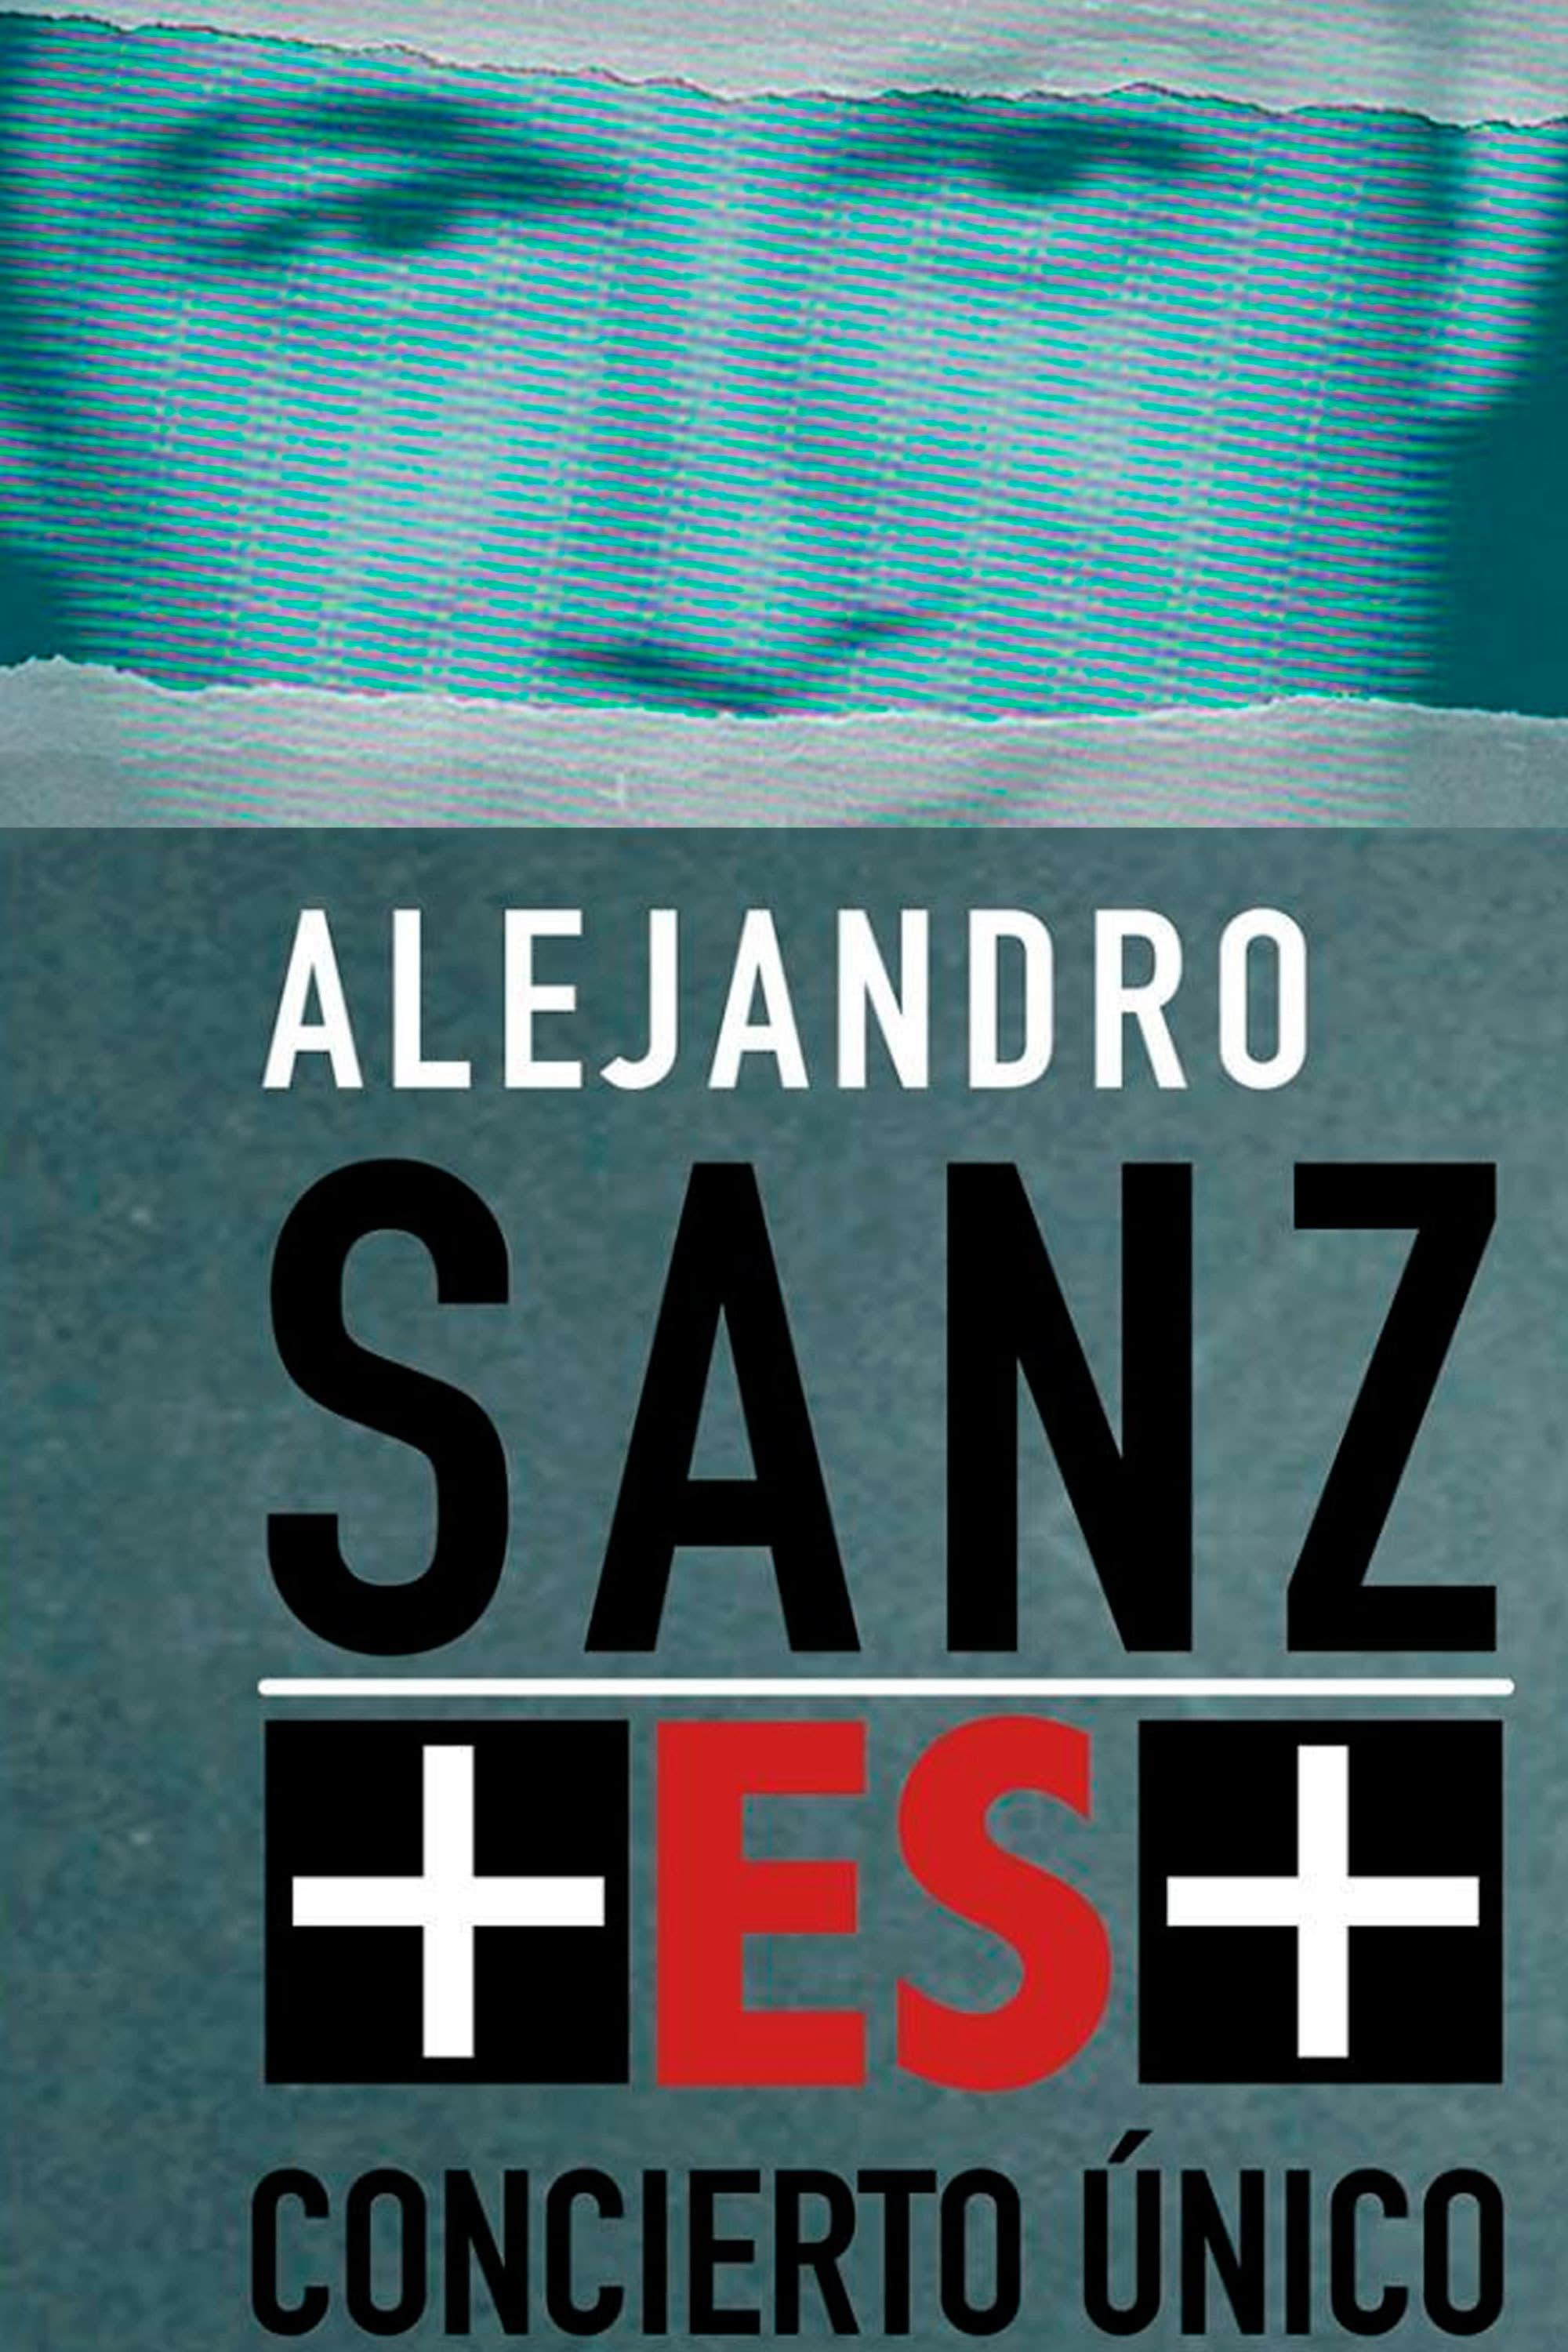 Alejandro Sanz  + ES + poster